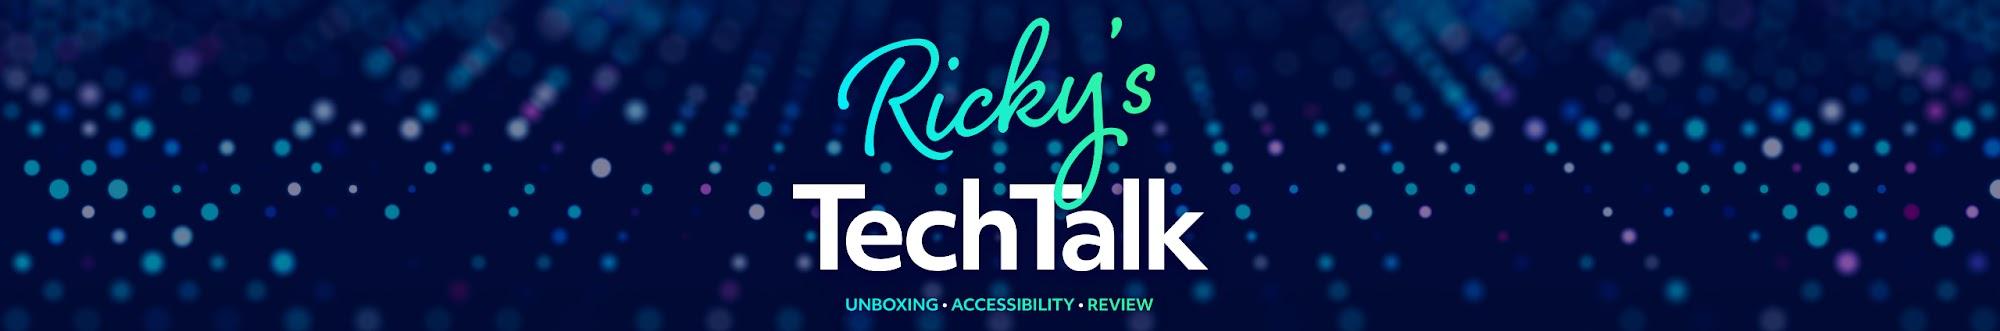 Ricky's TechTalk